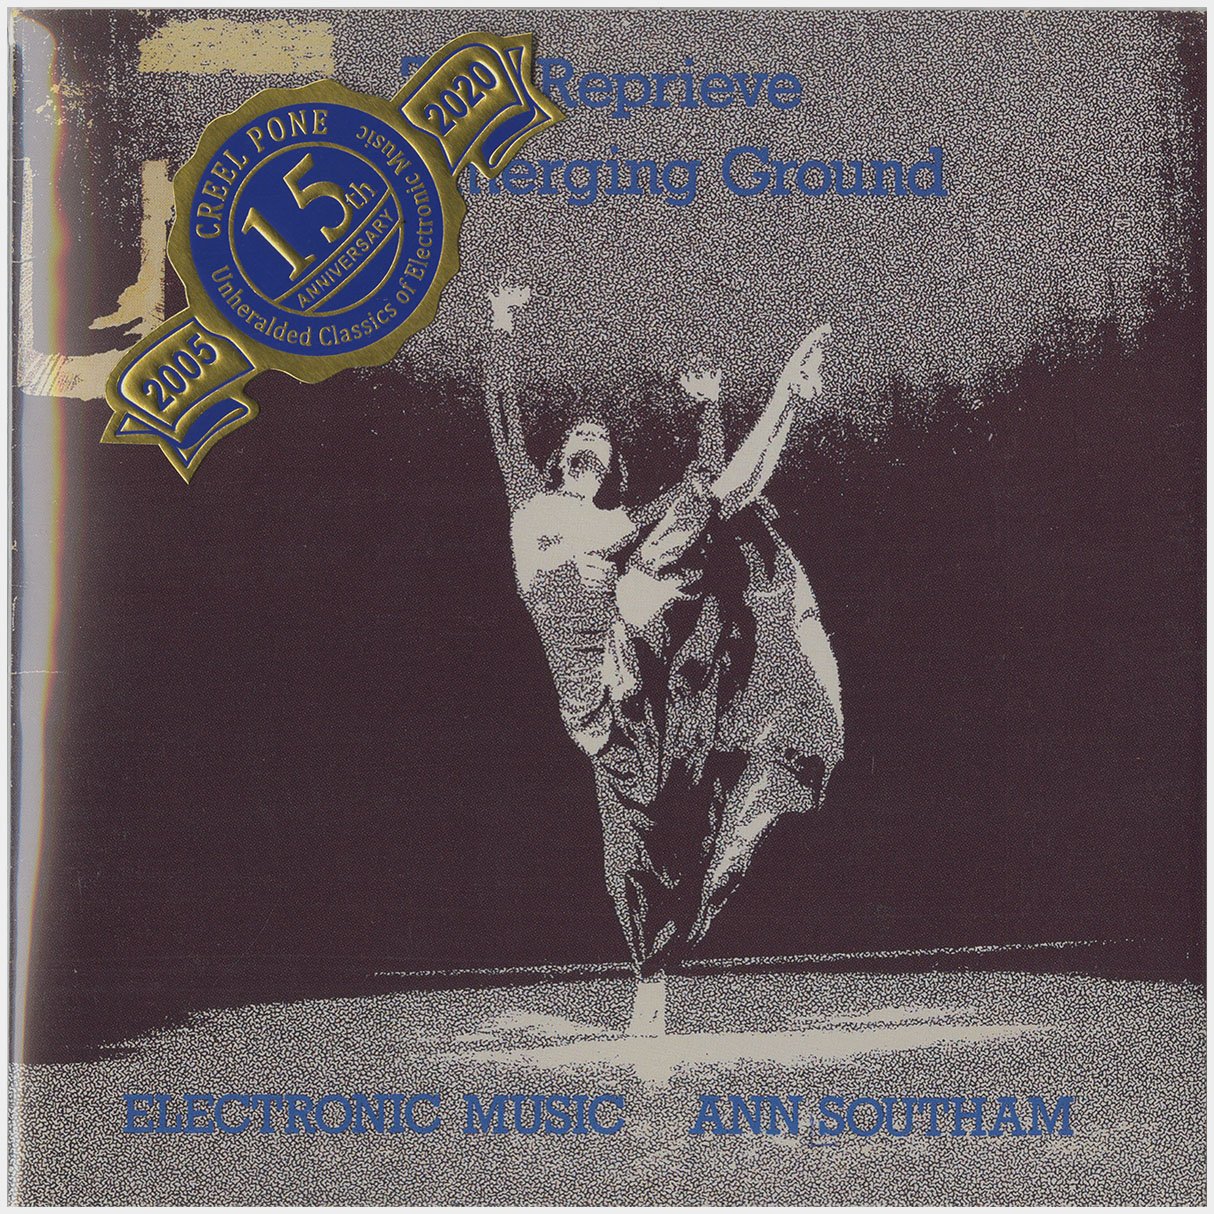 [CP 242 CD] Ann Southam; The Reprieve, The Emerging Ground +